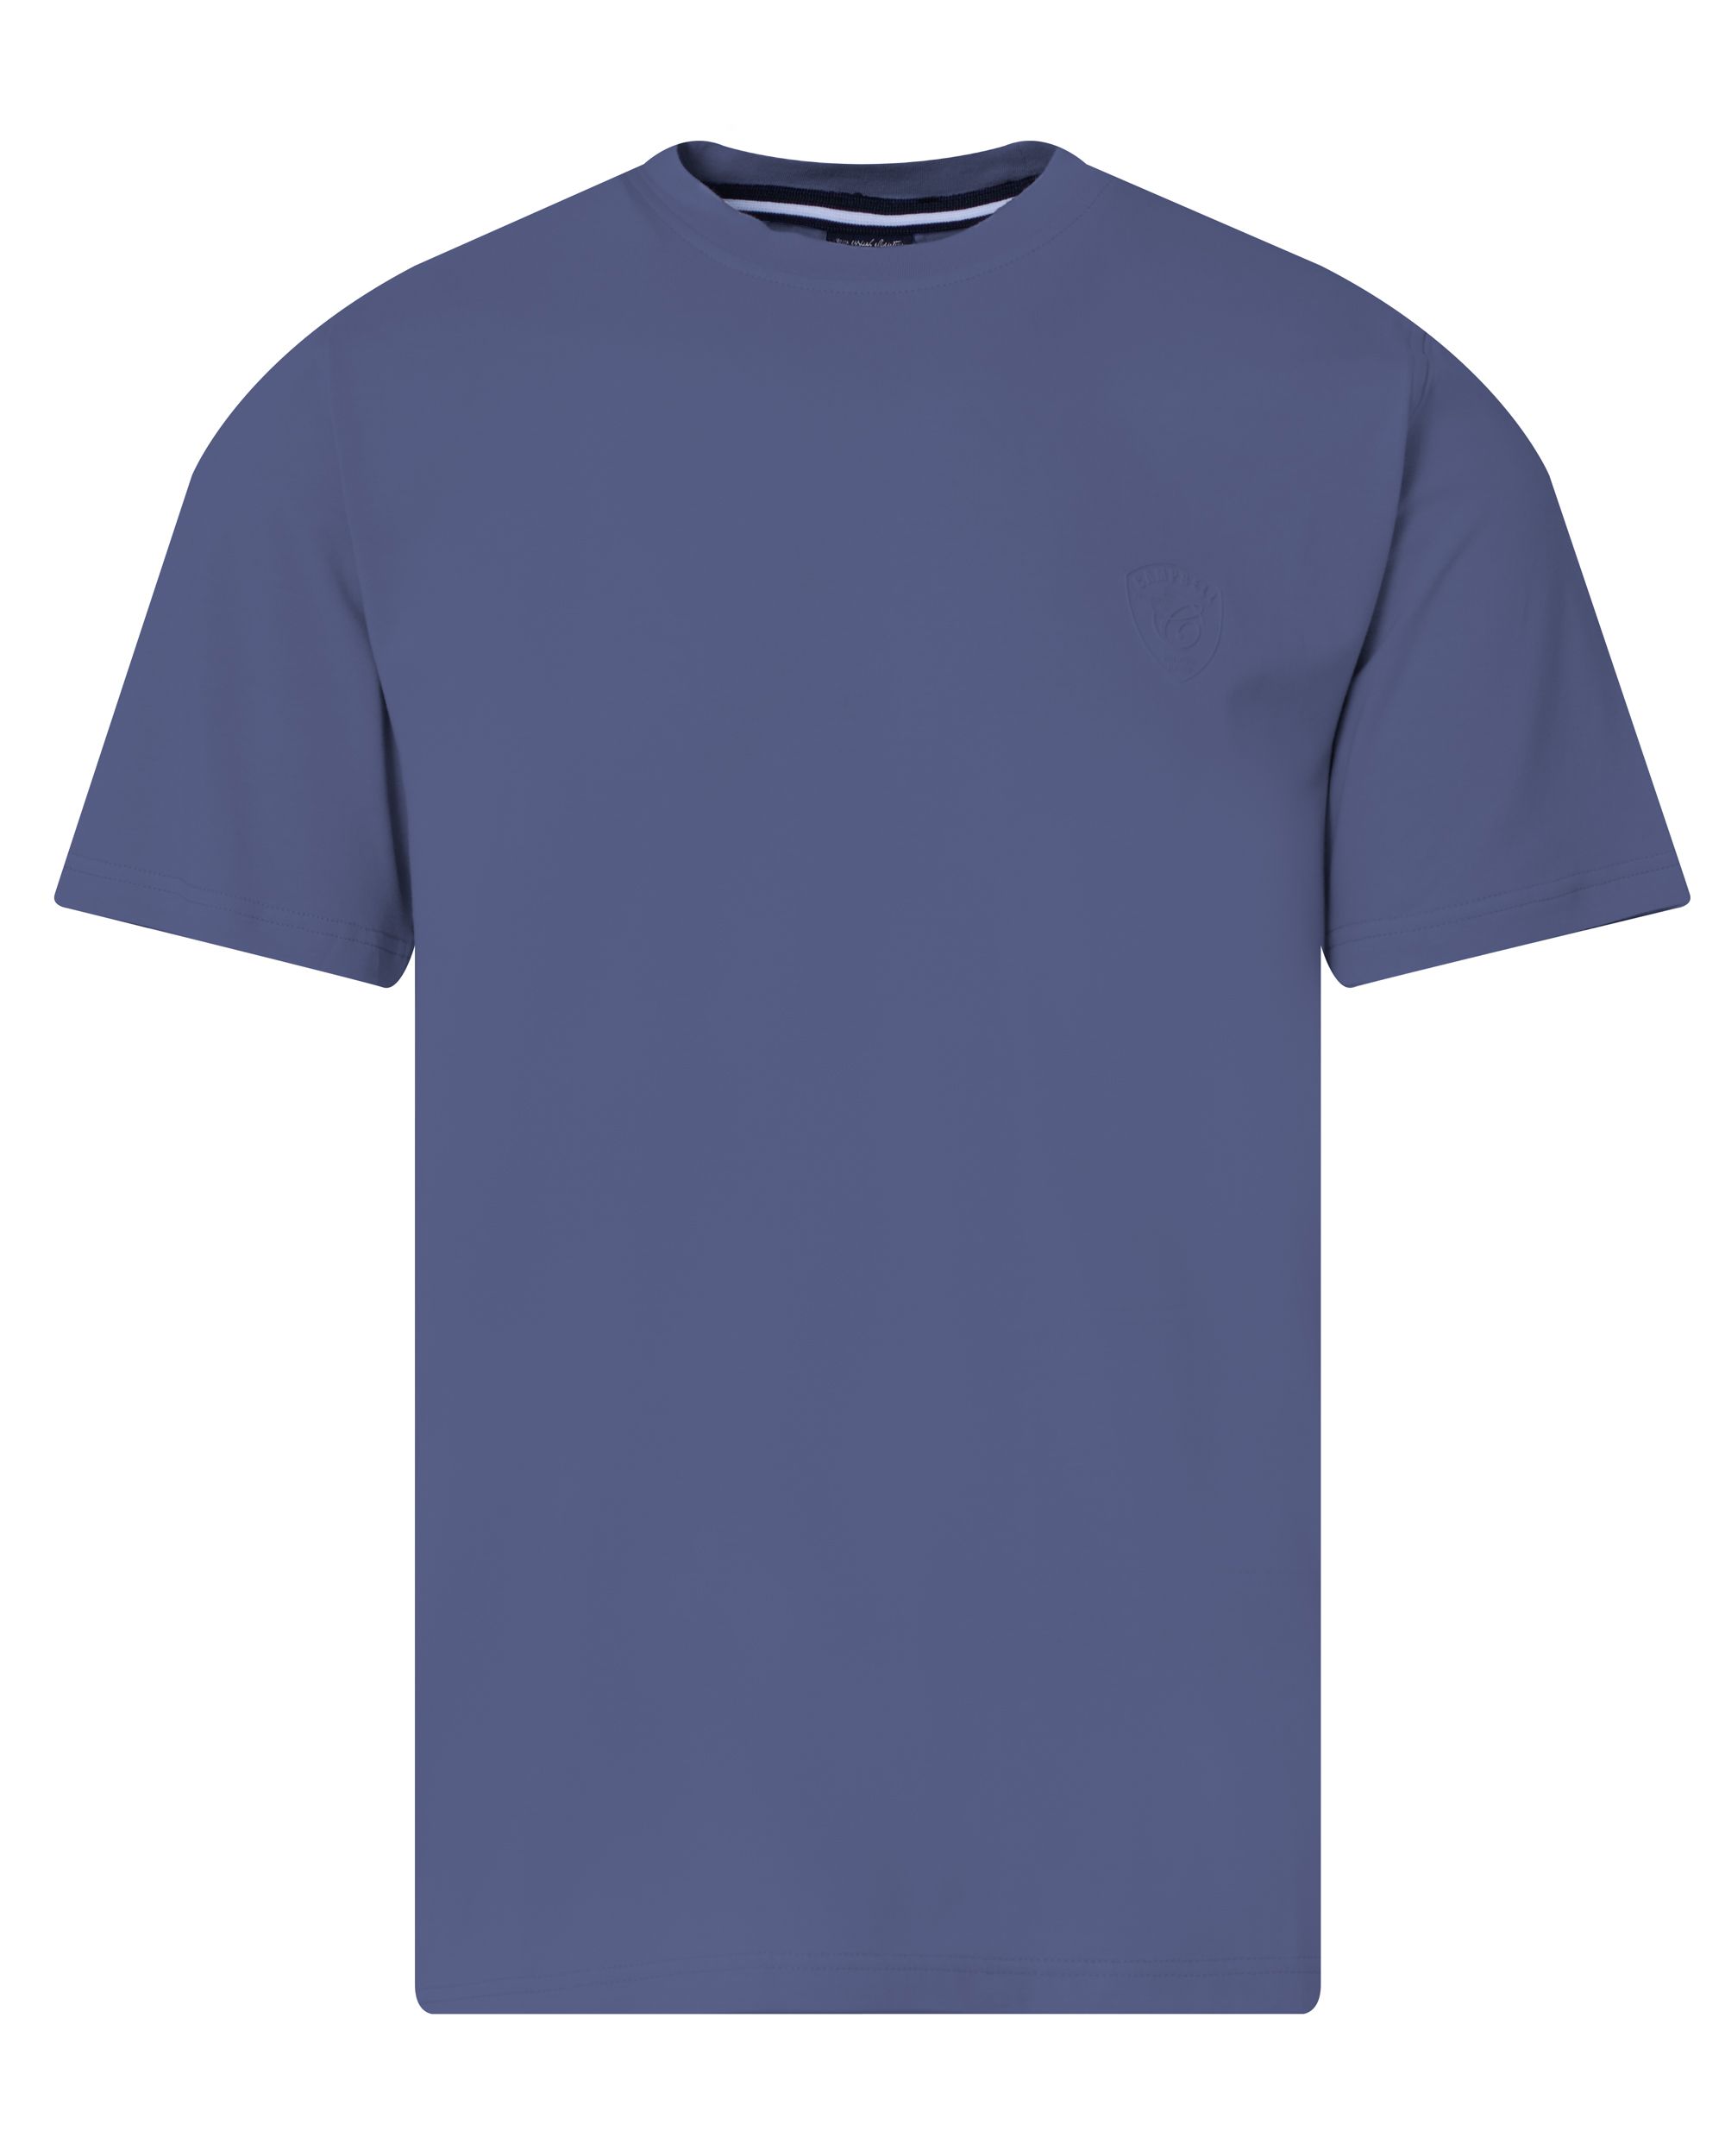 Campbell Classic Soho T-shirt KM Blue indigo 081503-008-XL